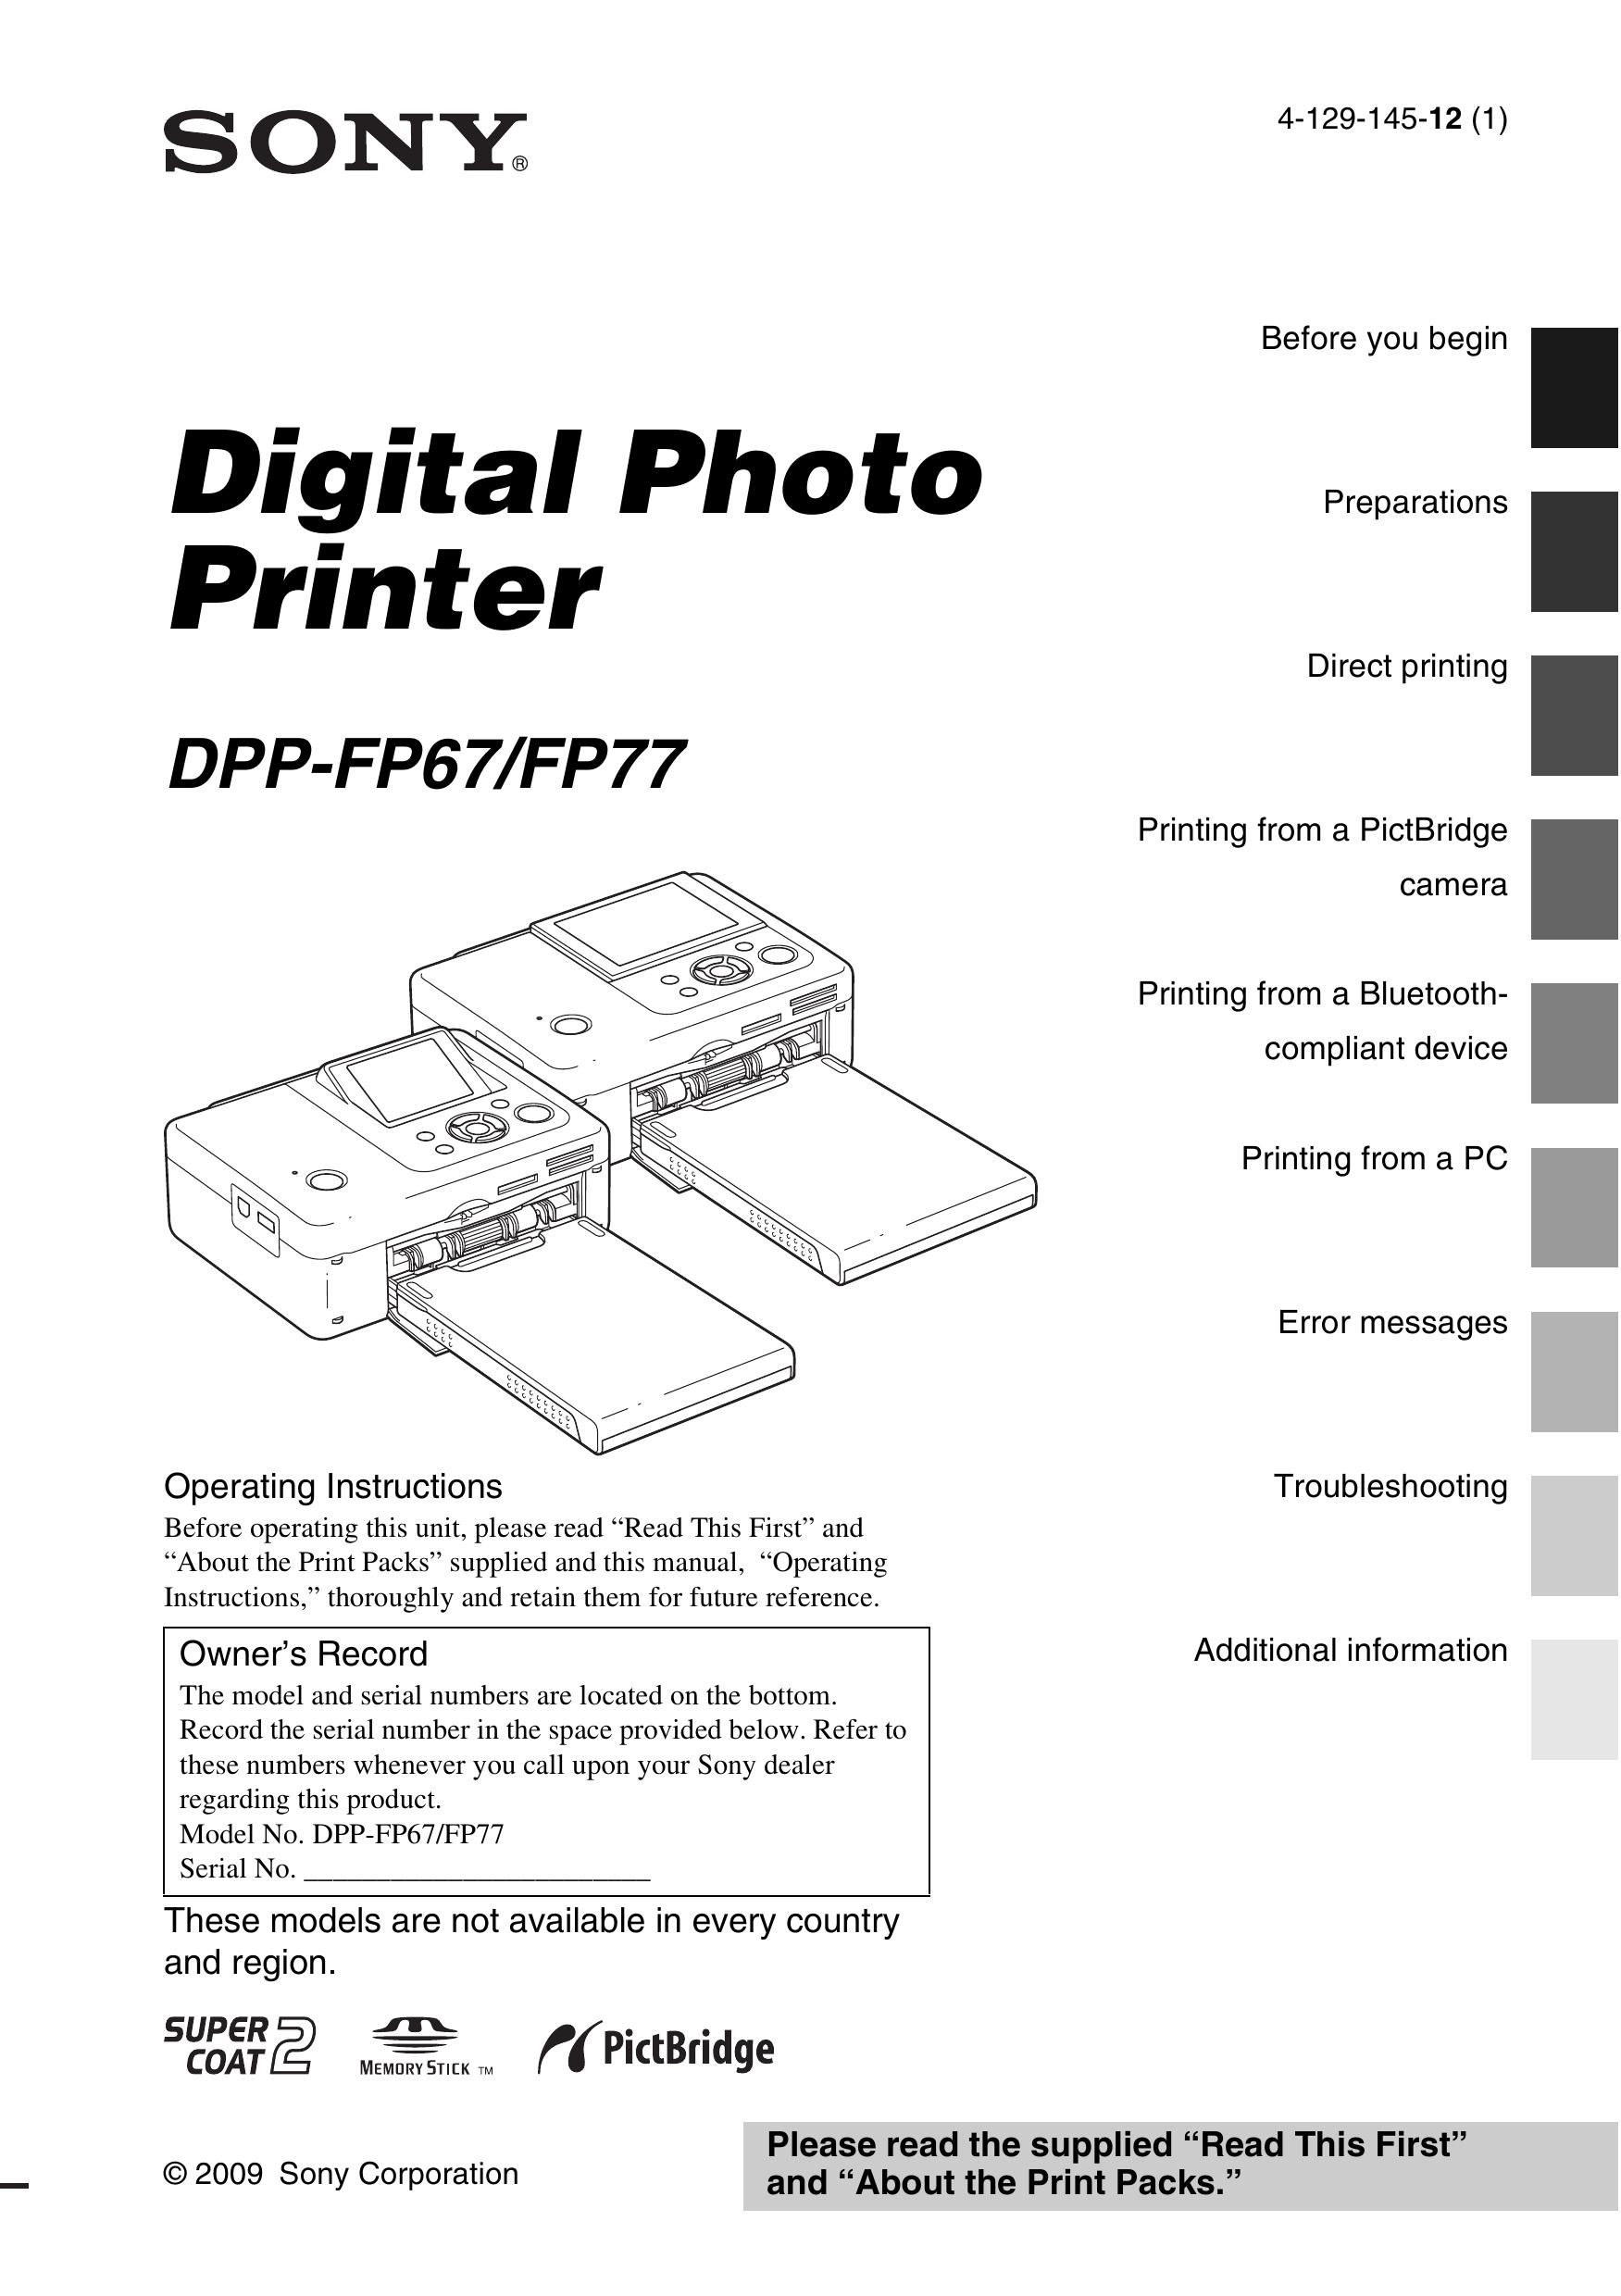 Sony DPP-FP77 Photo Printer User Manual